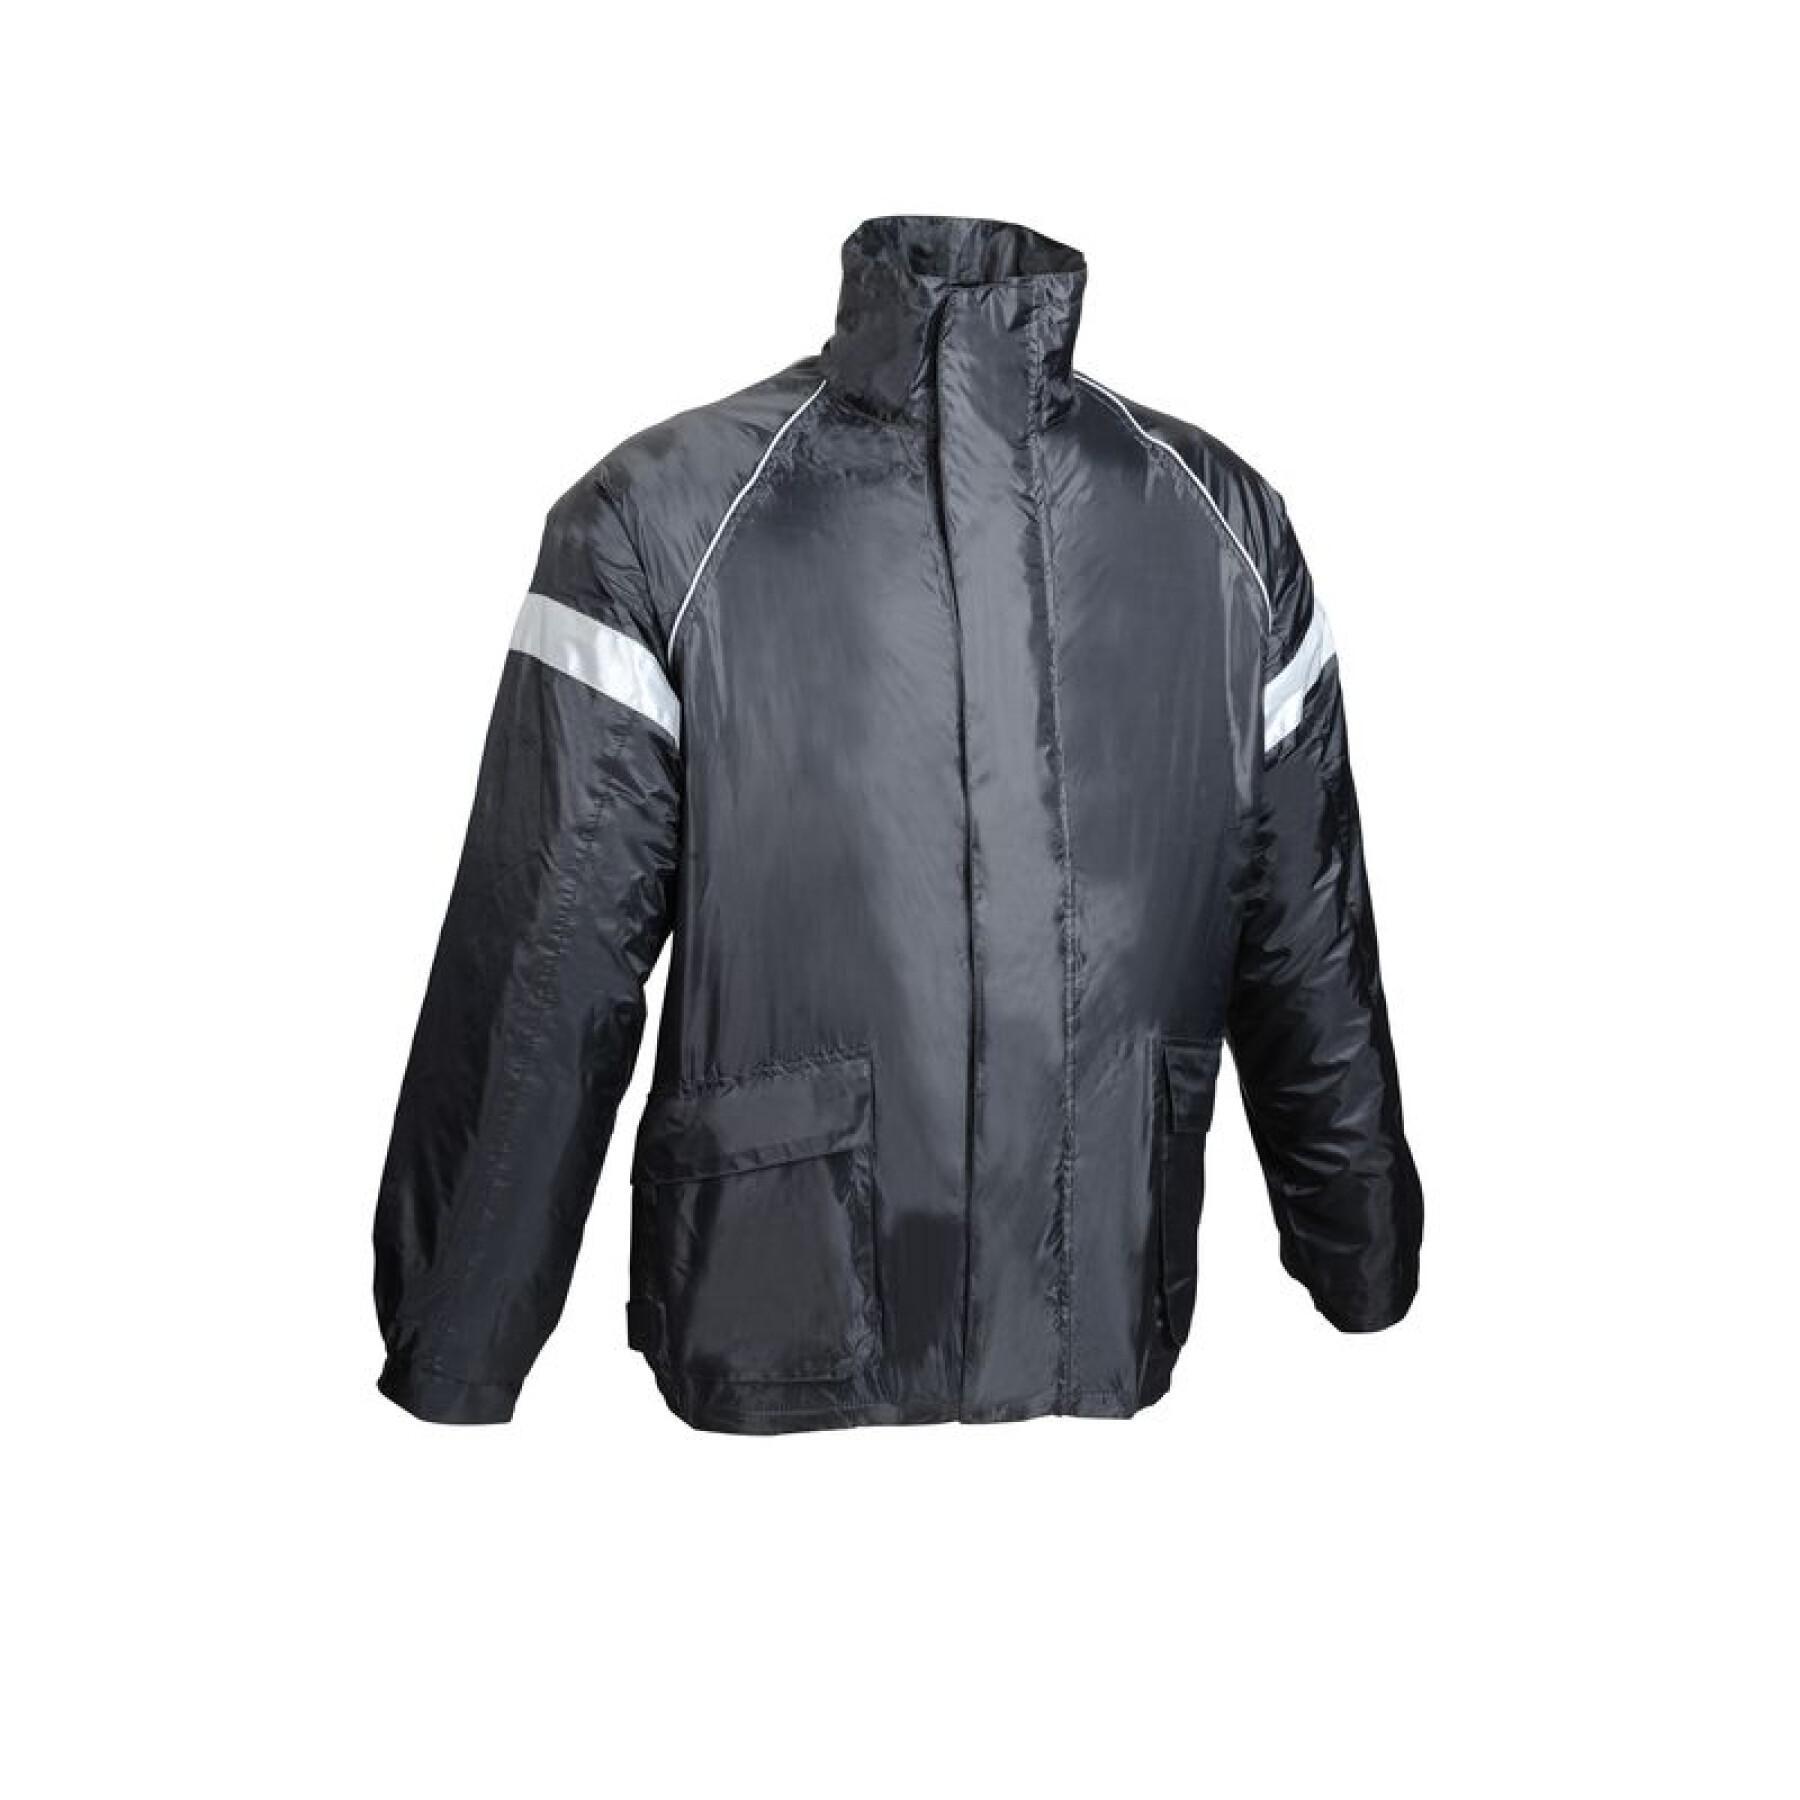 Rain jacket for men Motomod City-Argent